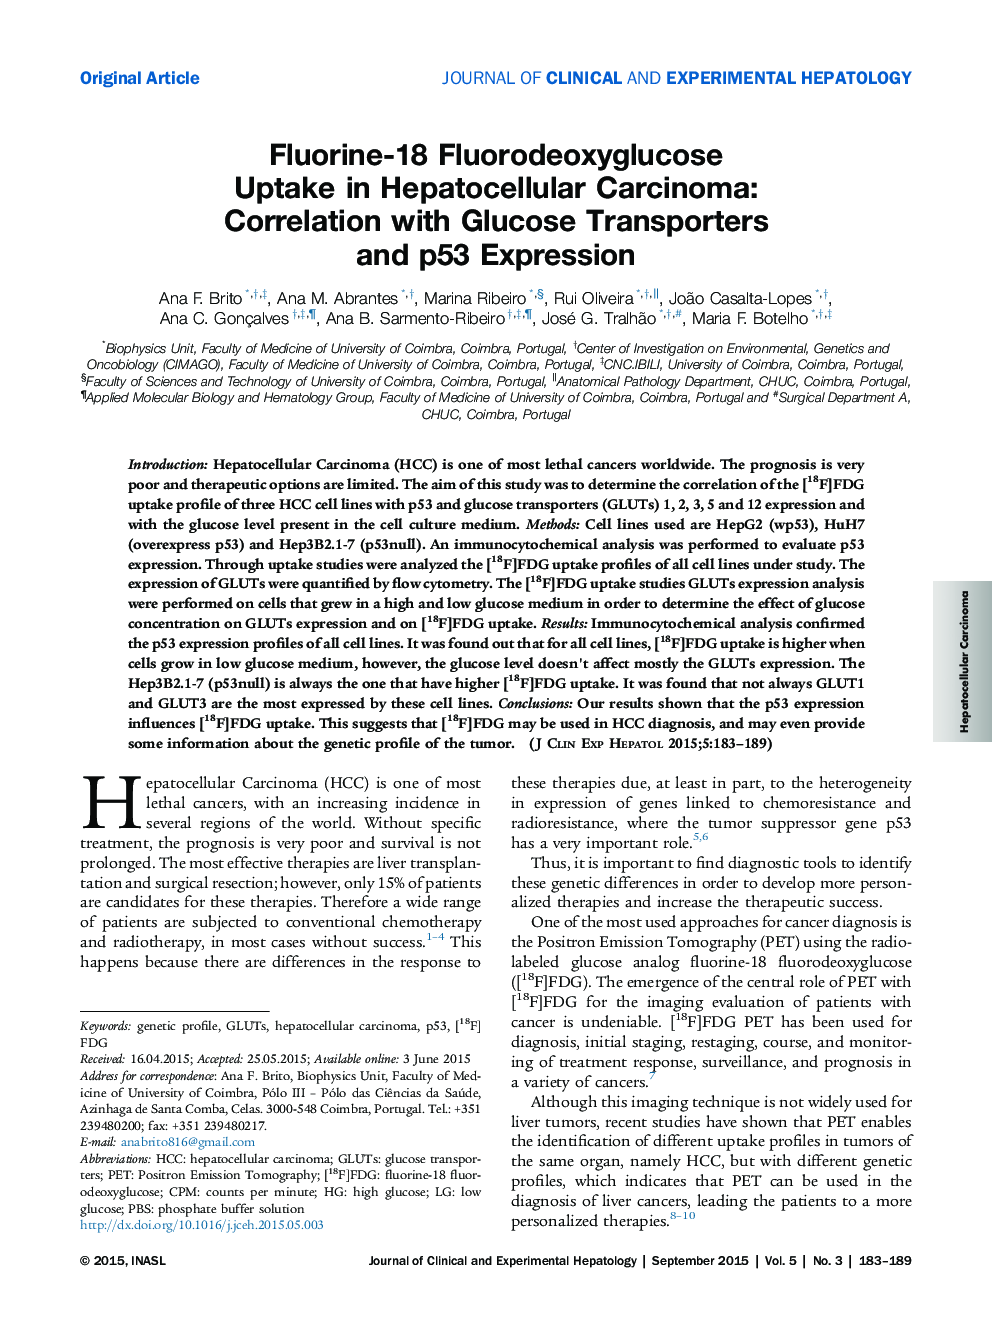 Fluorine-18 Fluorodeoxyglucose Uptake in Hepatocellular Carcinoma: Correlation with Glucose Transporters and p53 Expression